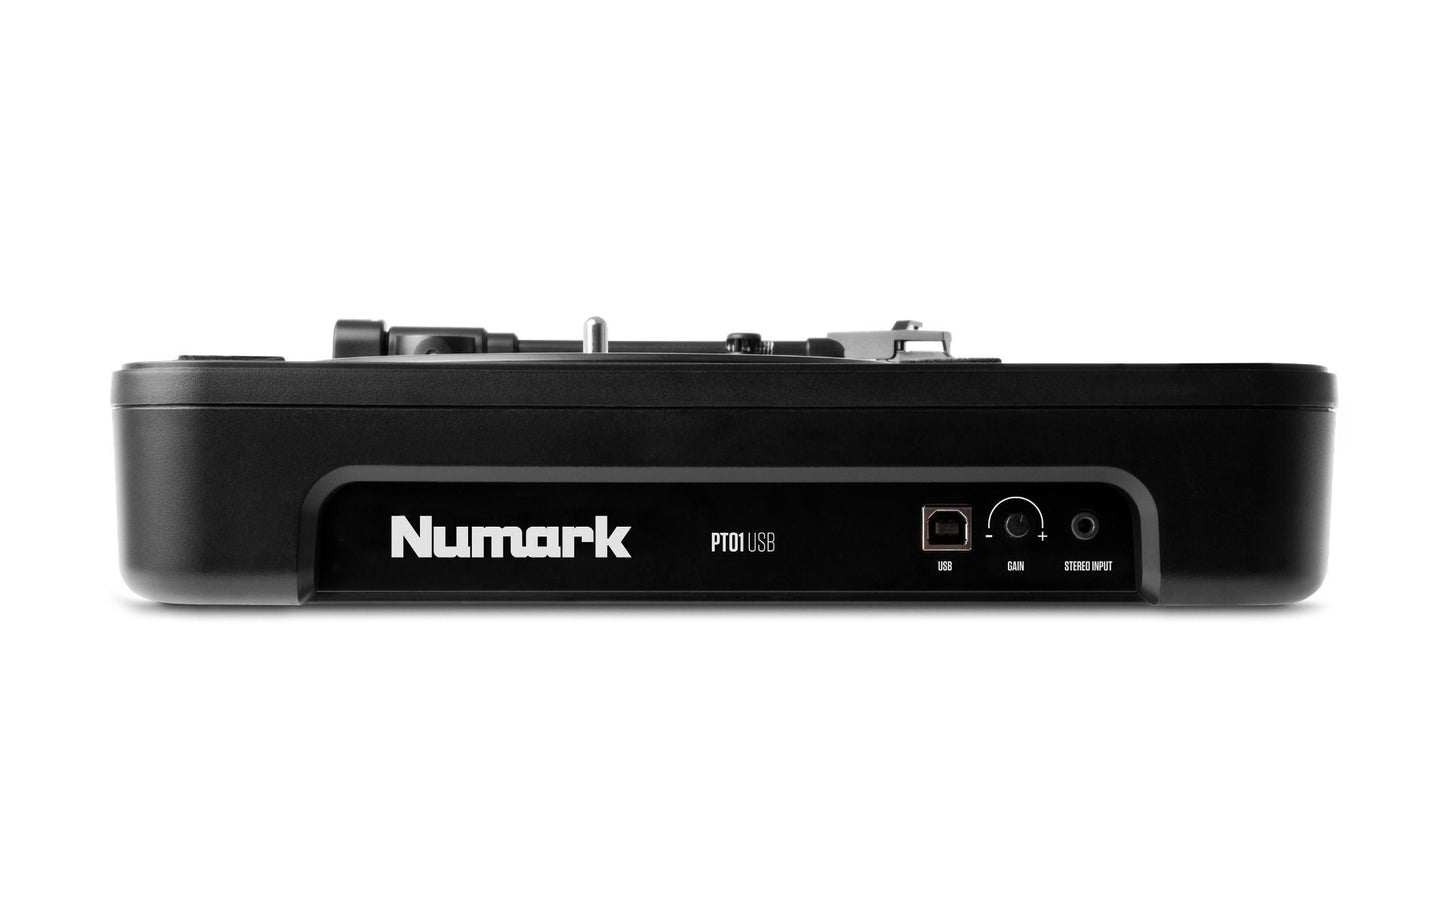 Numark PT01 USB Portable Vinyl-archiving Turntable